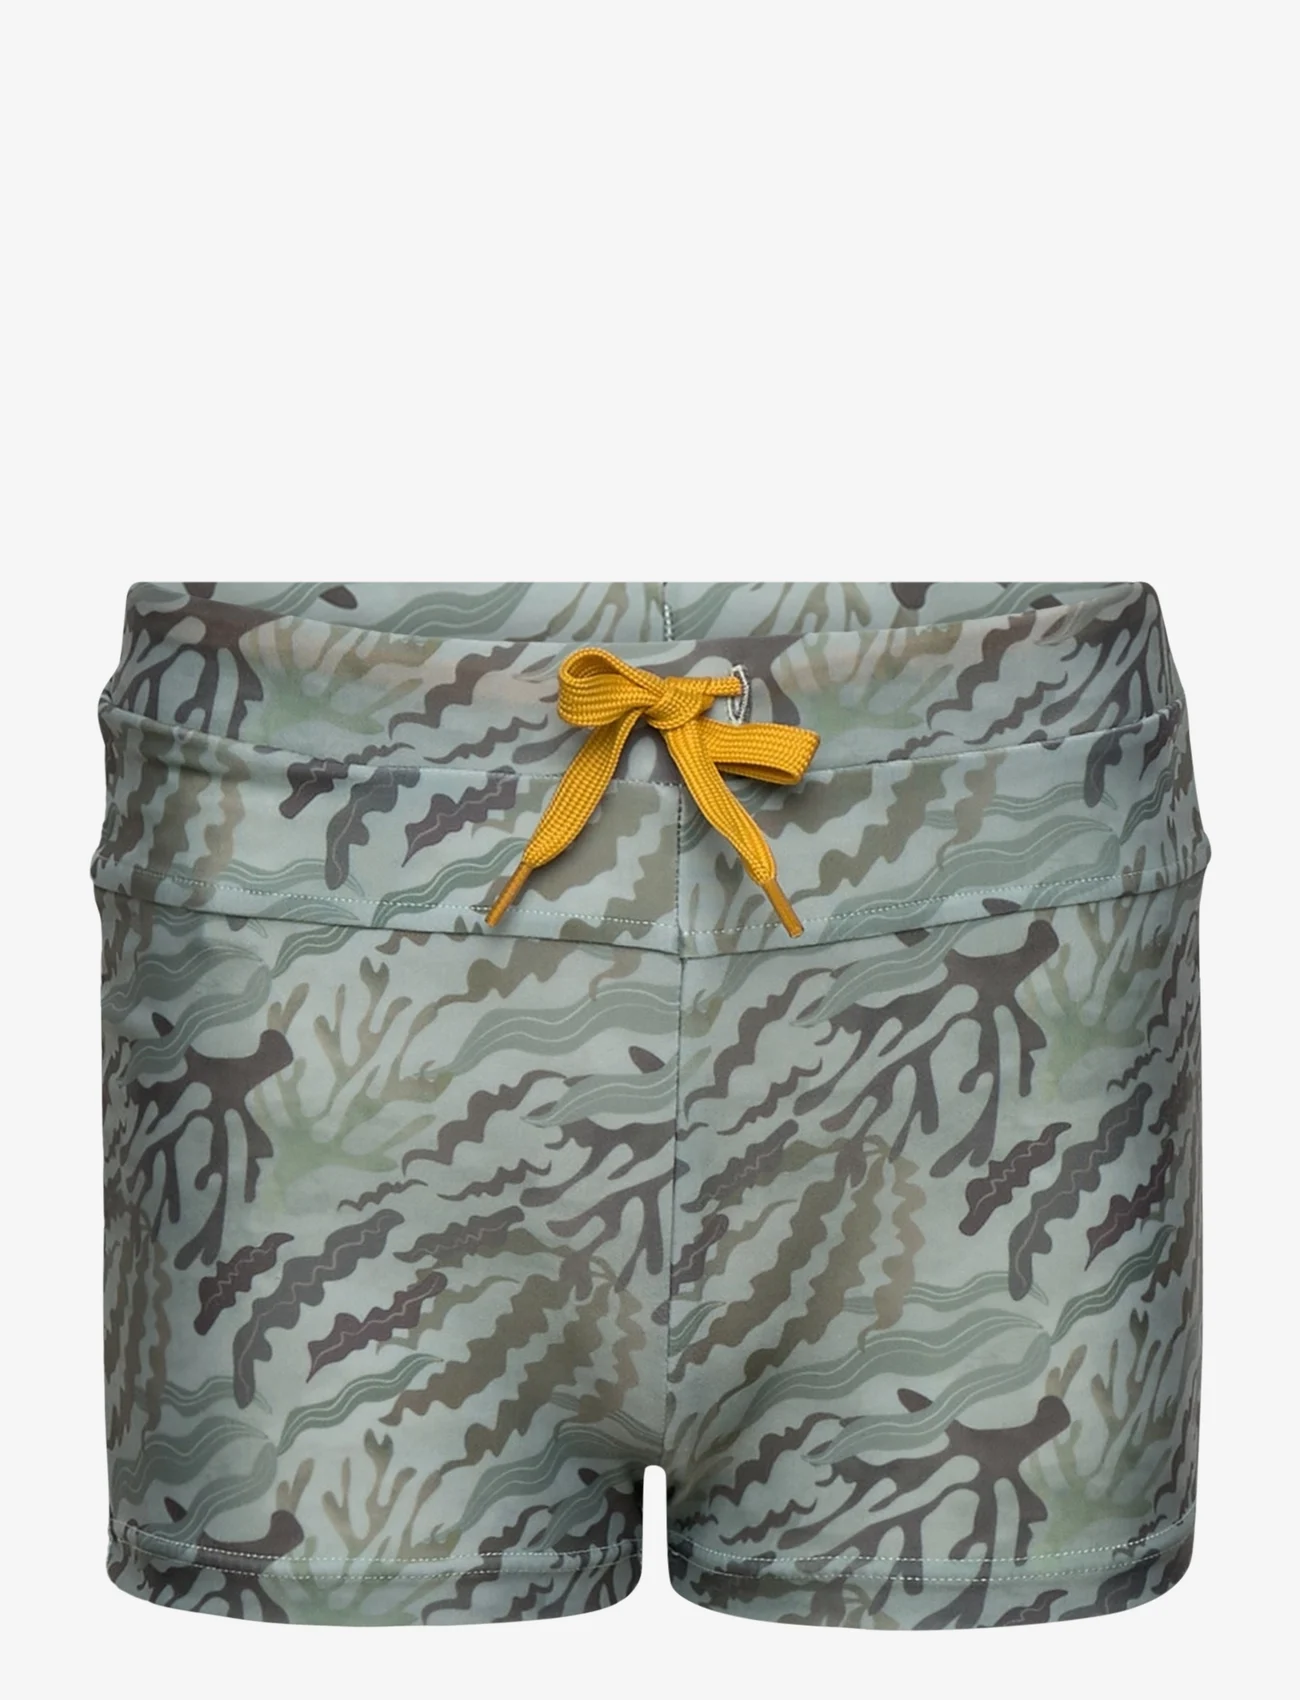 Mini A Ture - Gerryan printed swim shorts - gode sommertilbud - print sea weed camo - 0